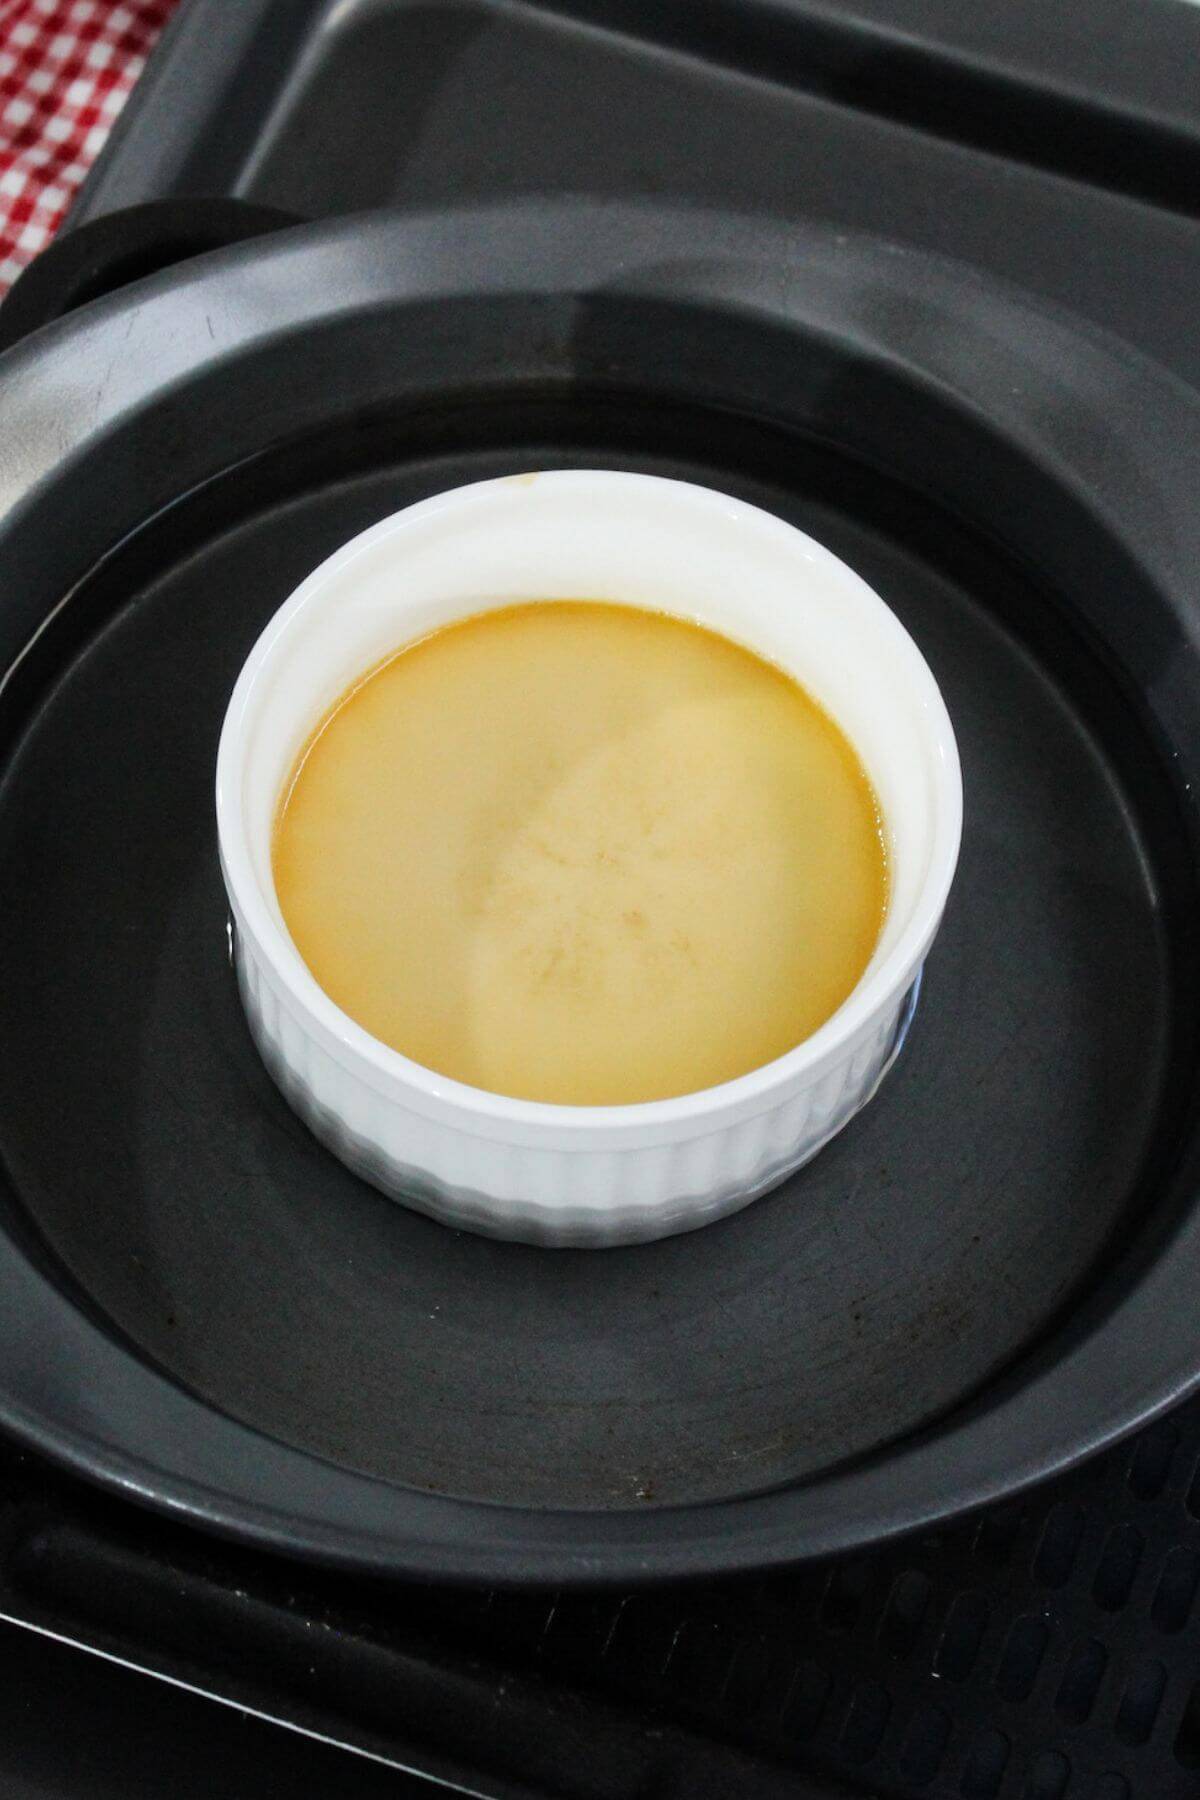 A ramekin of baked leche flan sitting on baking pan with water bath.